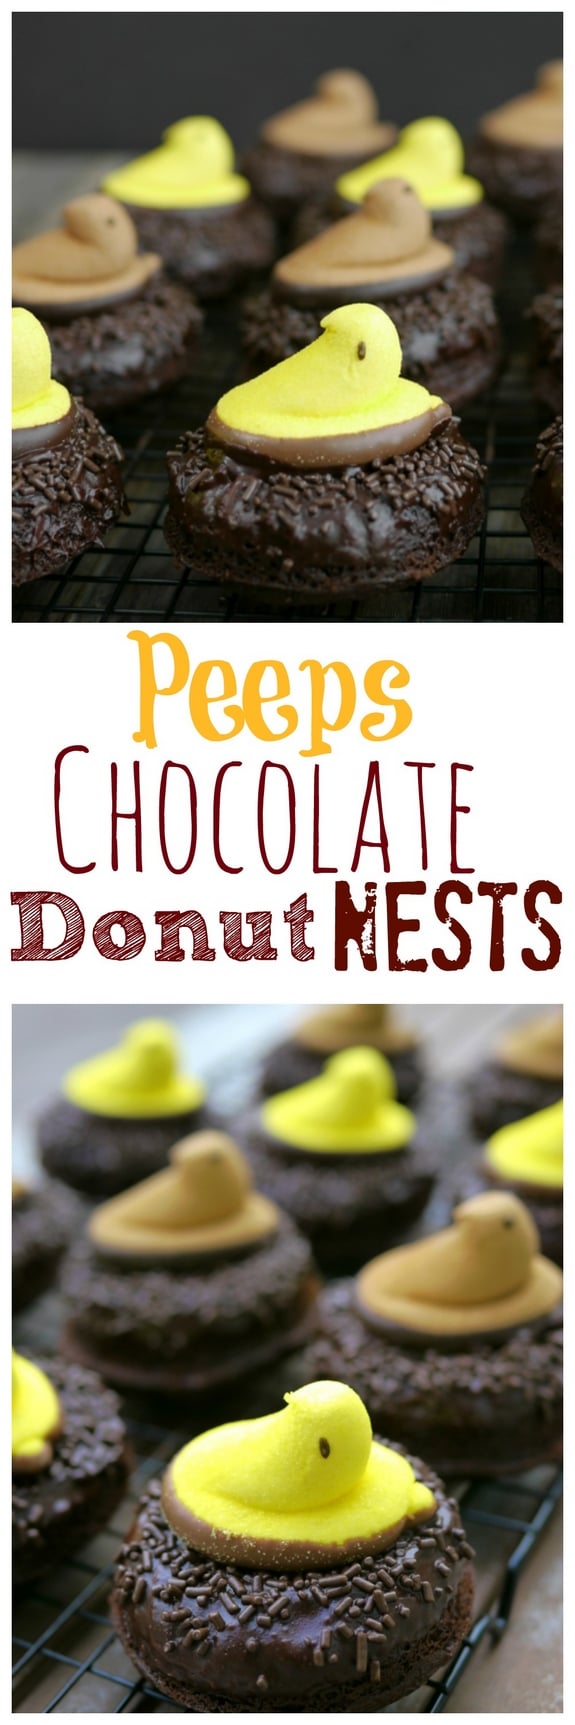 Peeps Chocolate Donut Nests